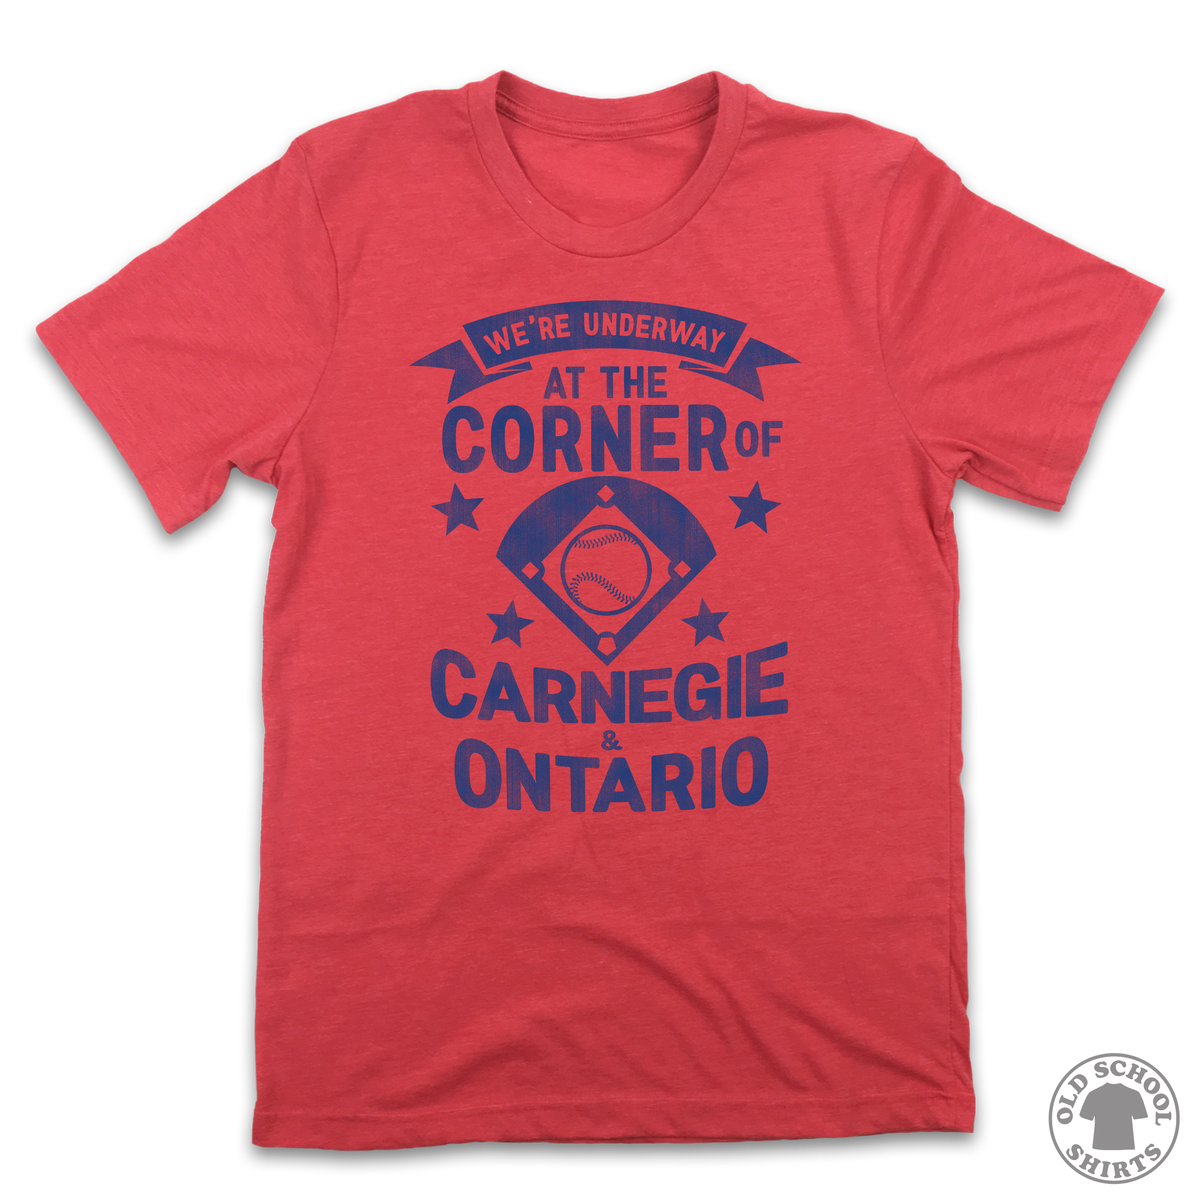 The Corner of Carnegie & Ontario